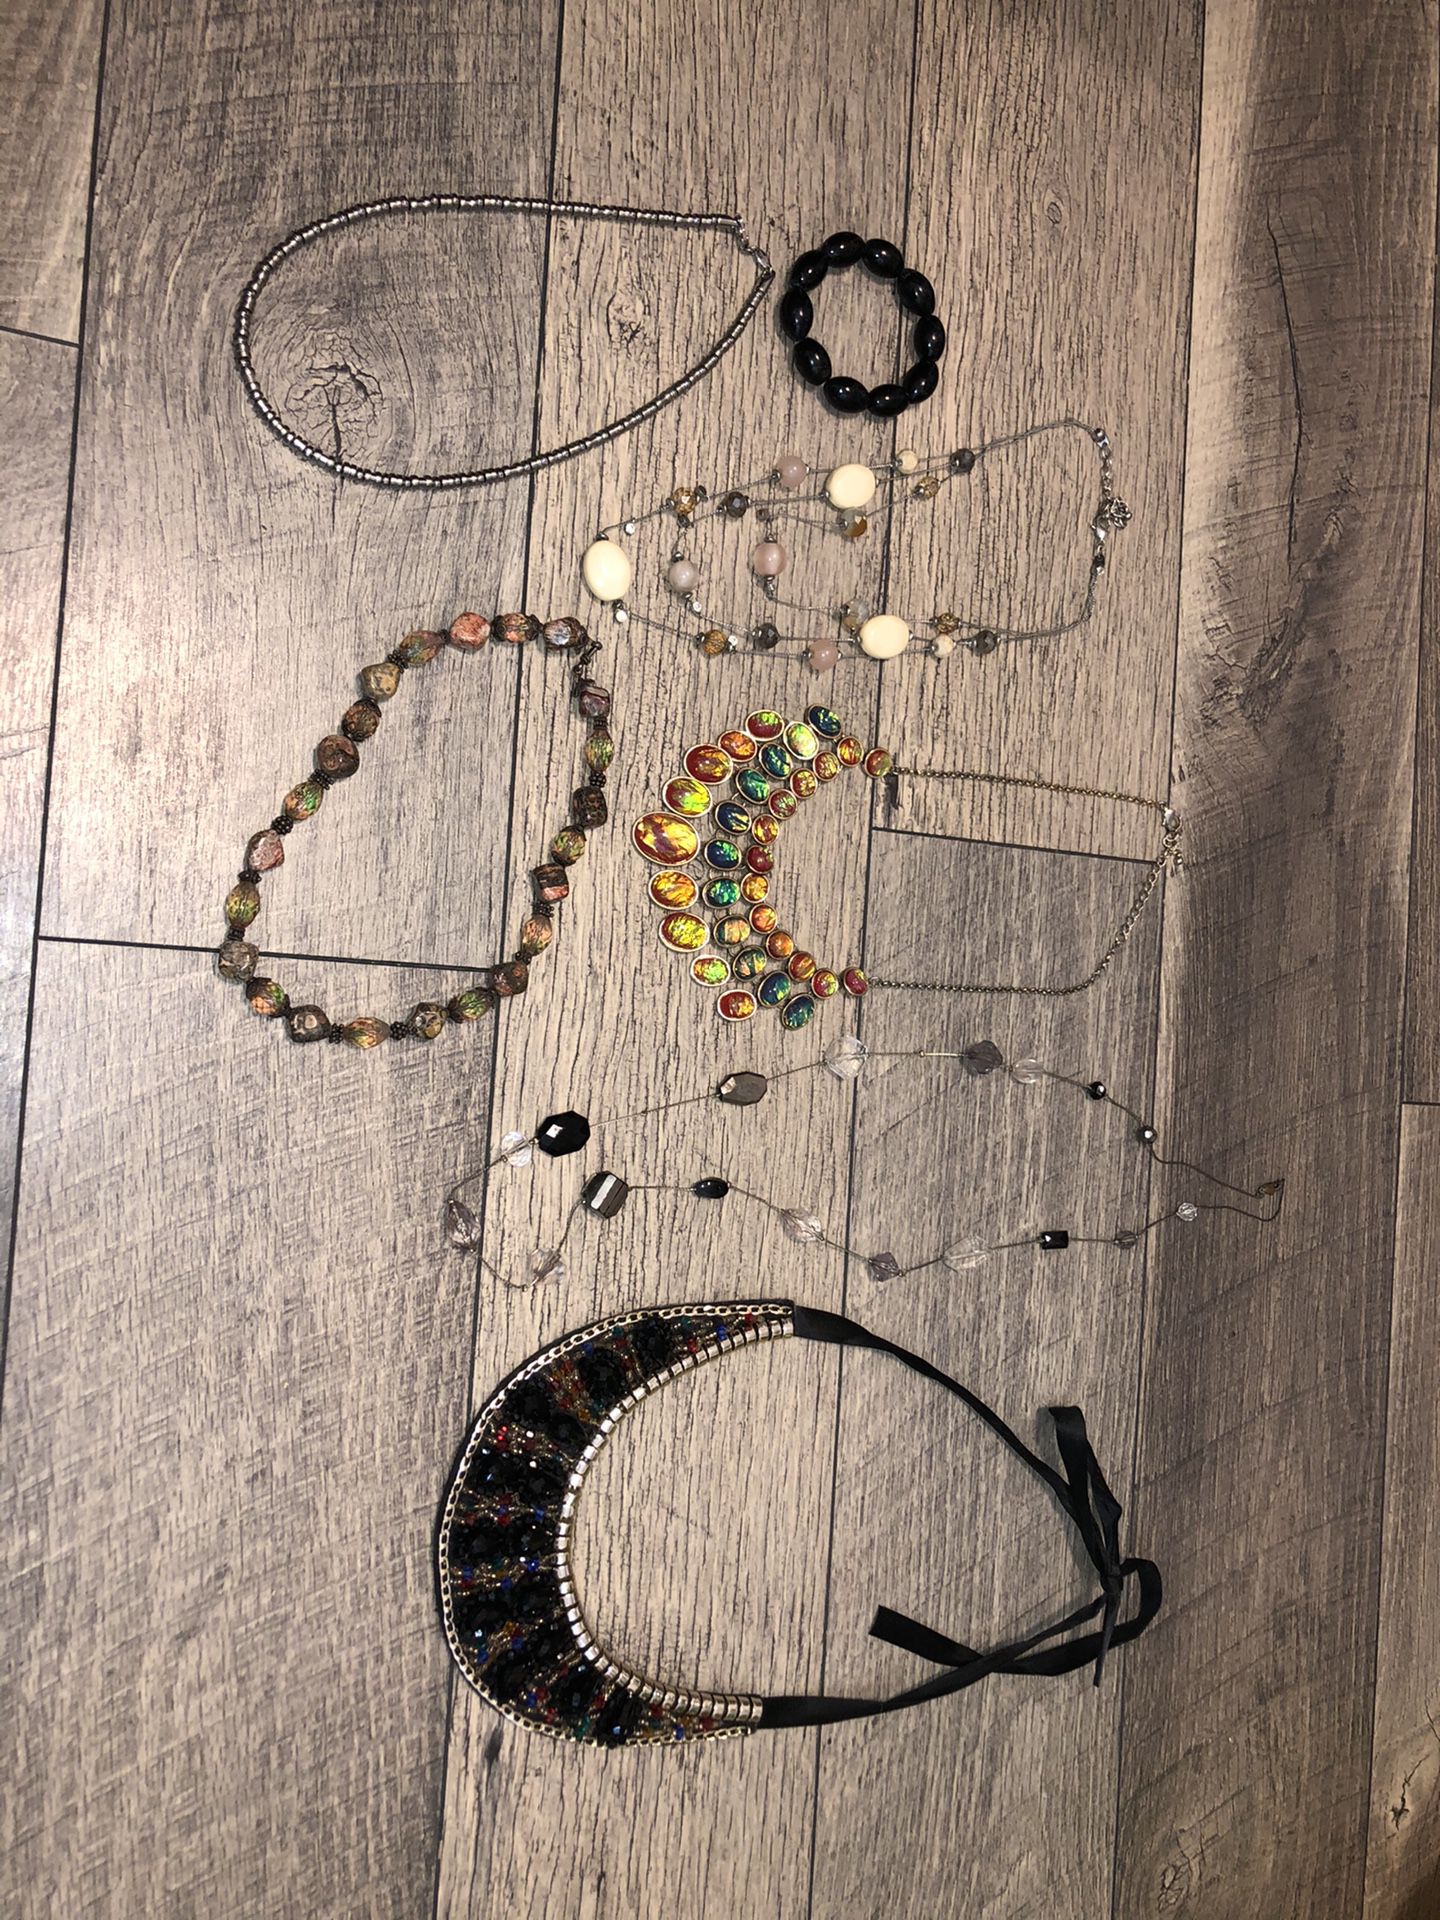 Random necklaces and 1 bracelet jewelry